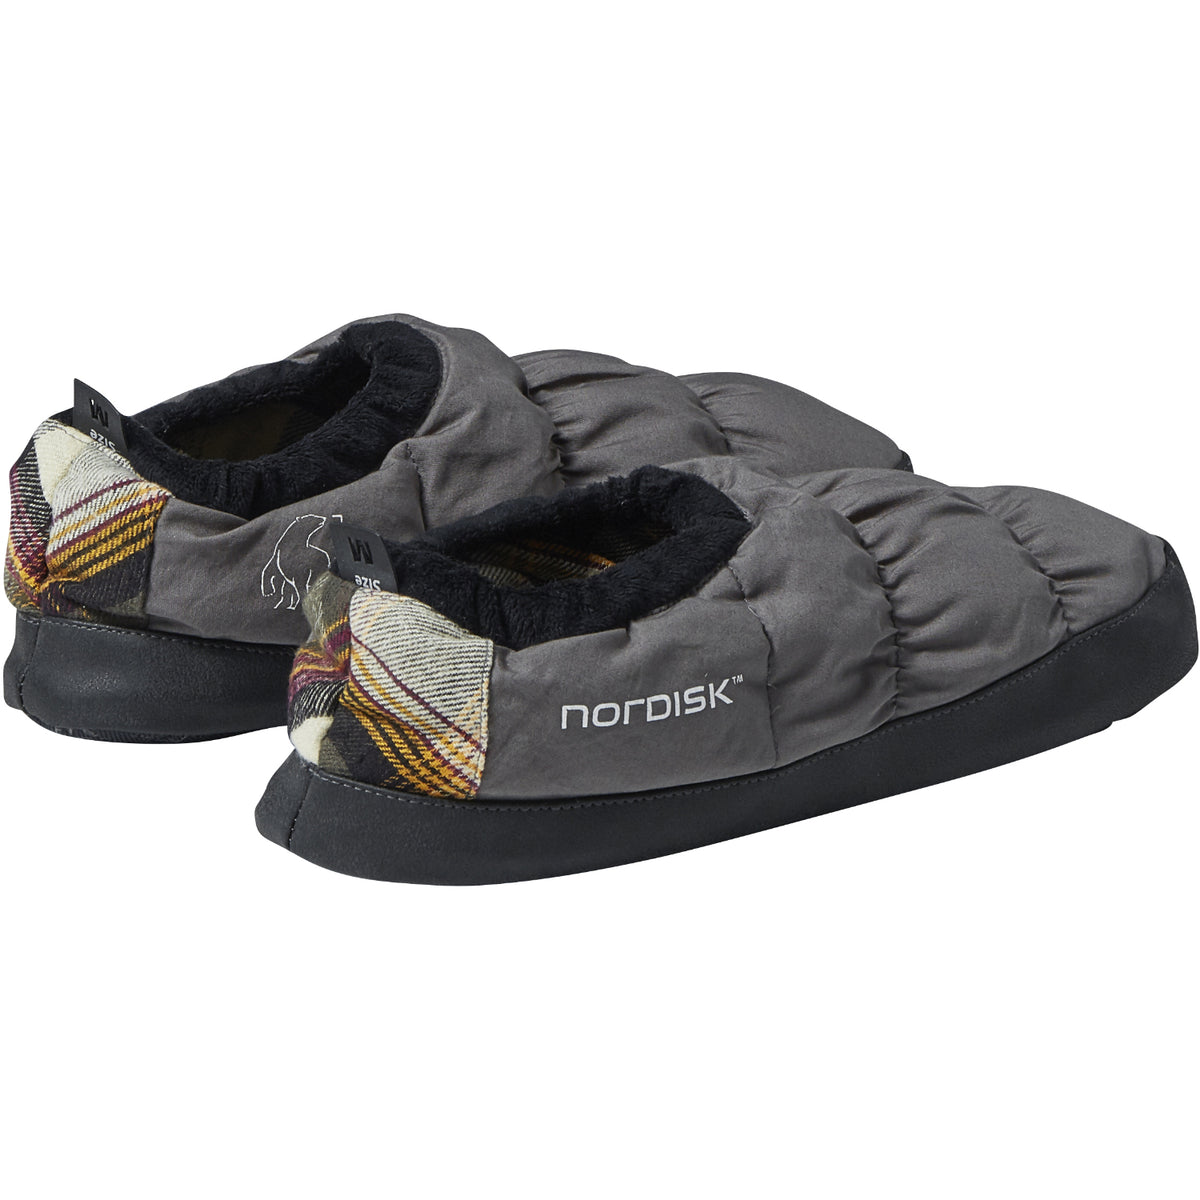 Nordisk Hermod Down Shoe in grey